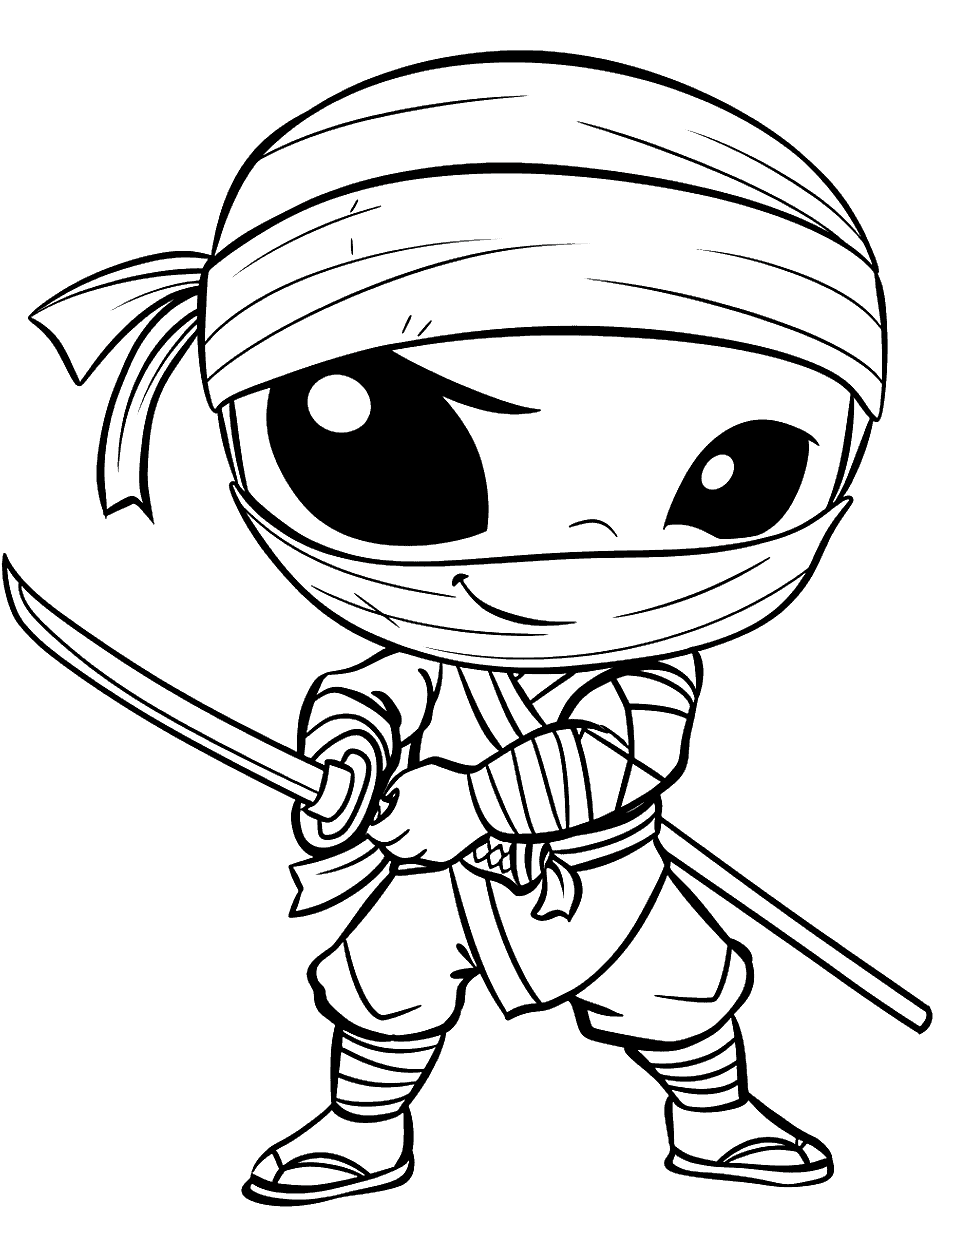 Chibi Ninja Smile Coloring Page - A cute, chibi-style ninja with a big smile, holding a small katana.